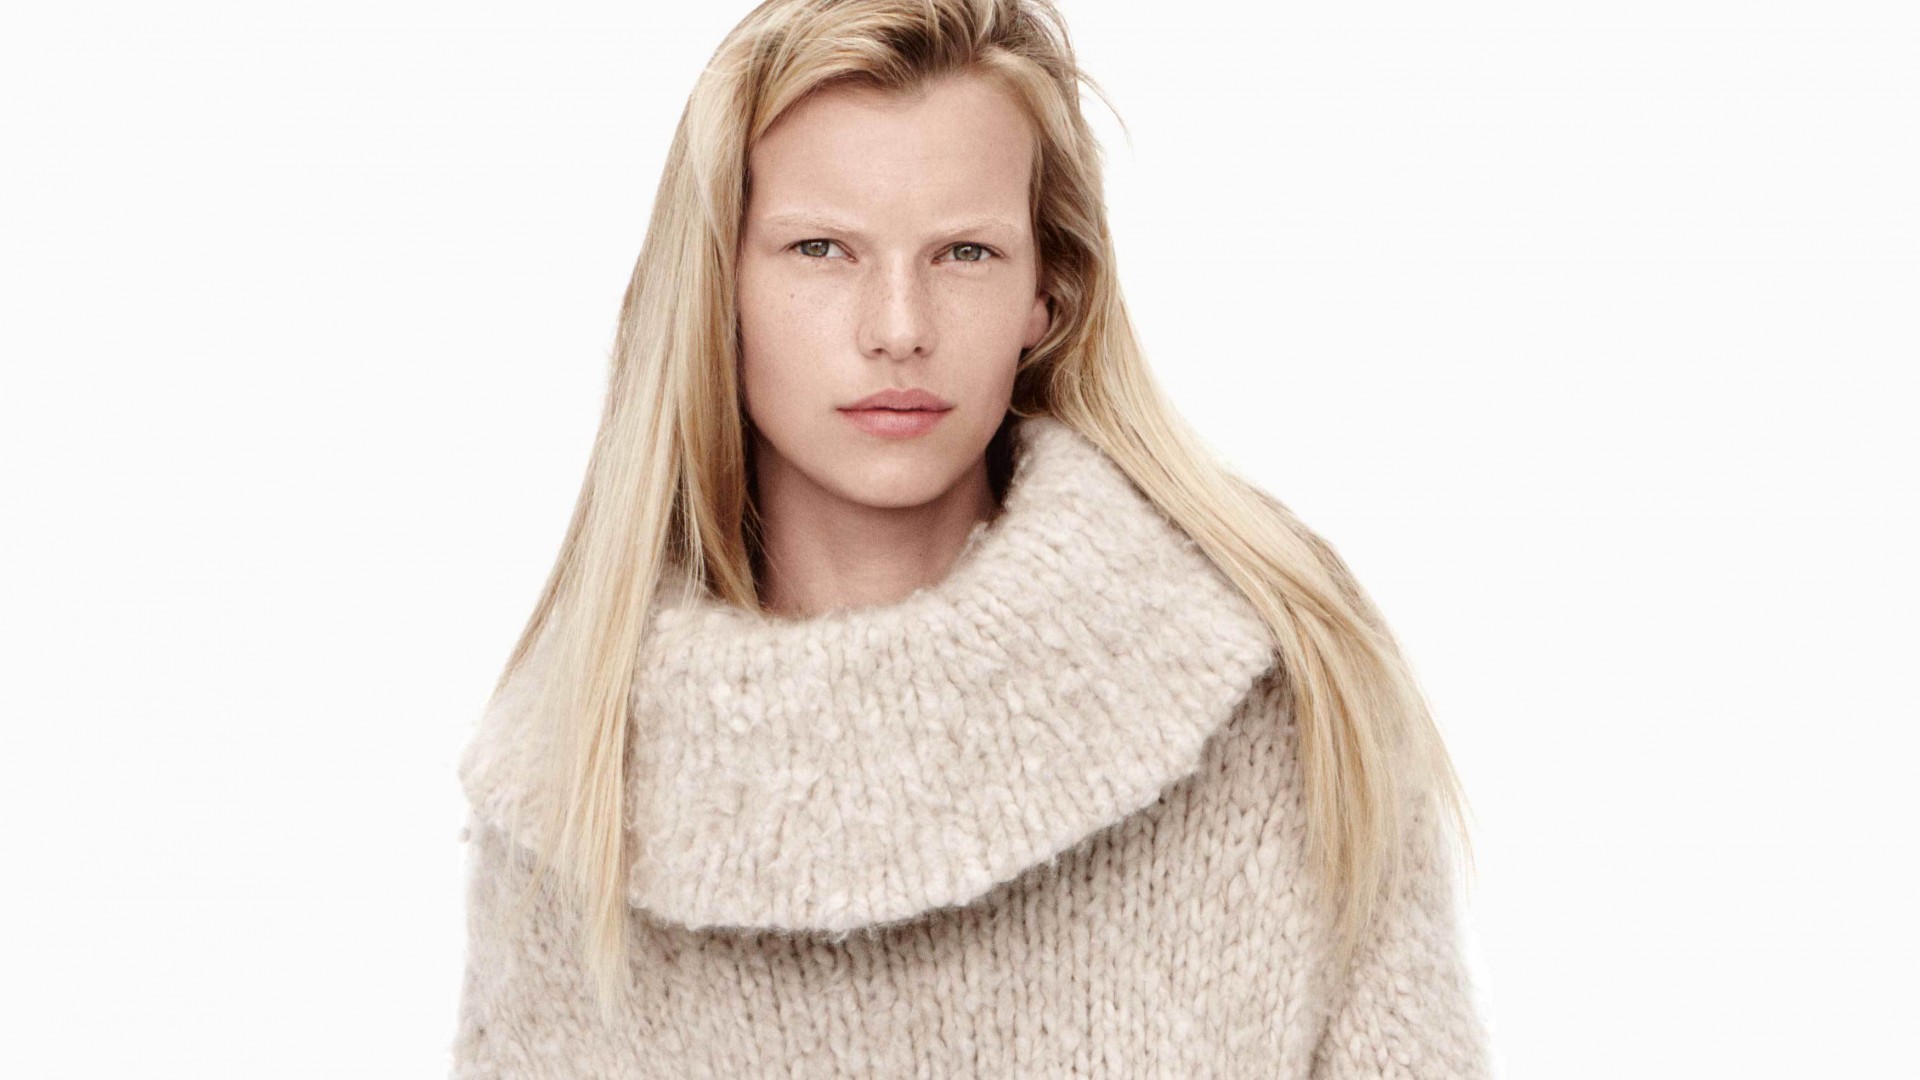 Лина Берг, модель, весна, взгляд, белый фон, Lina Berg, model, spring 2015 top models, blonde, look, white background (horizontal)